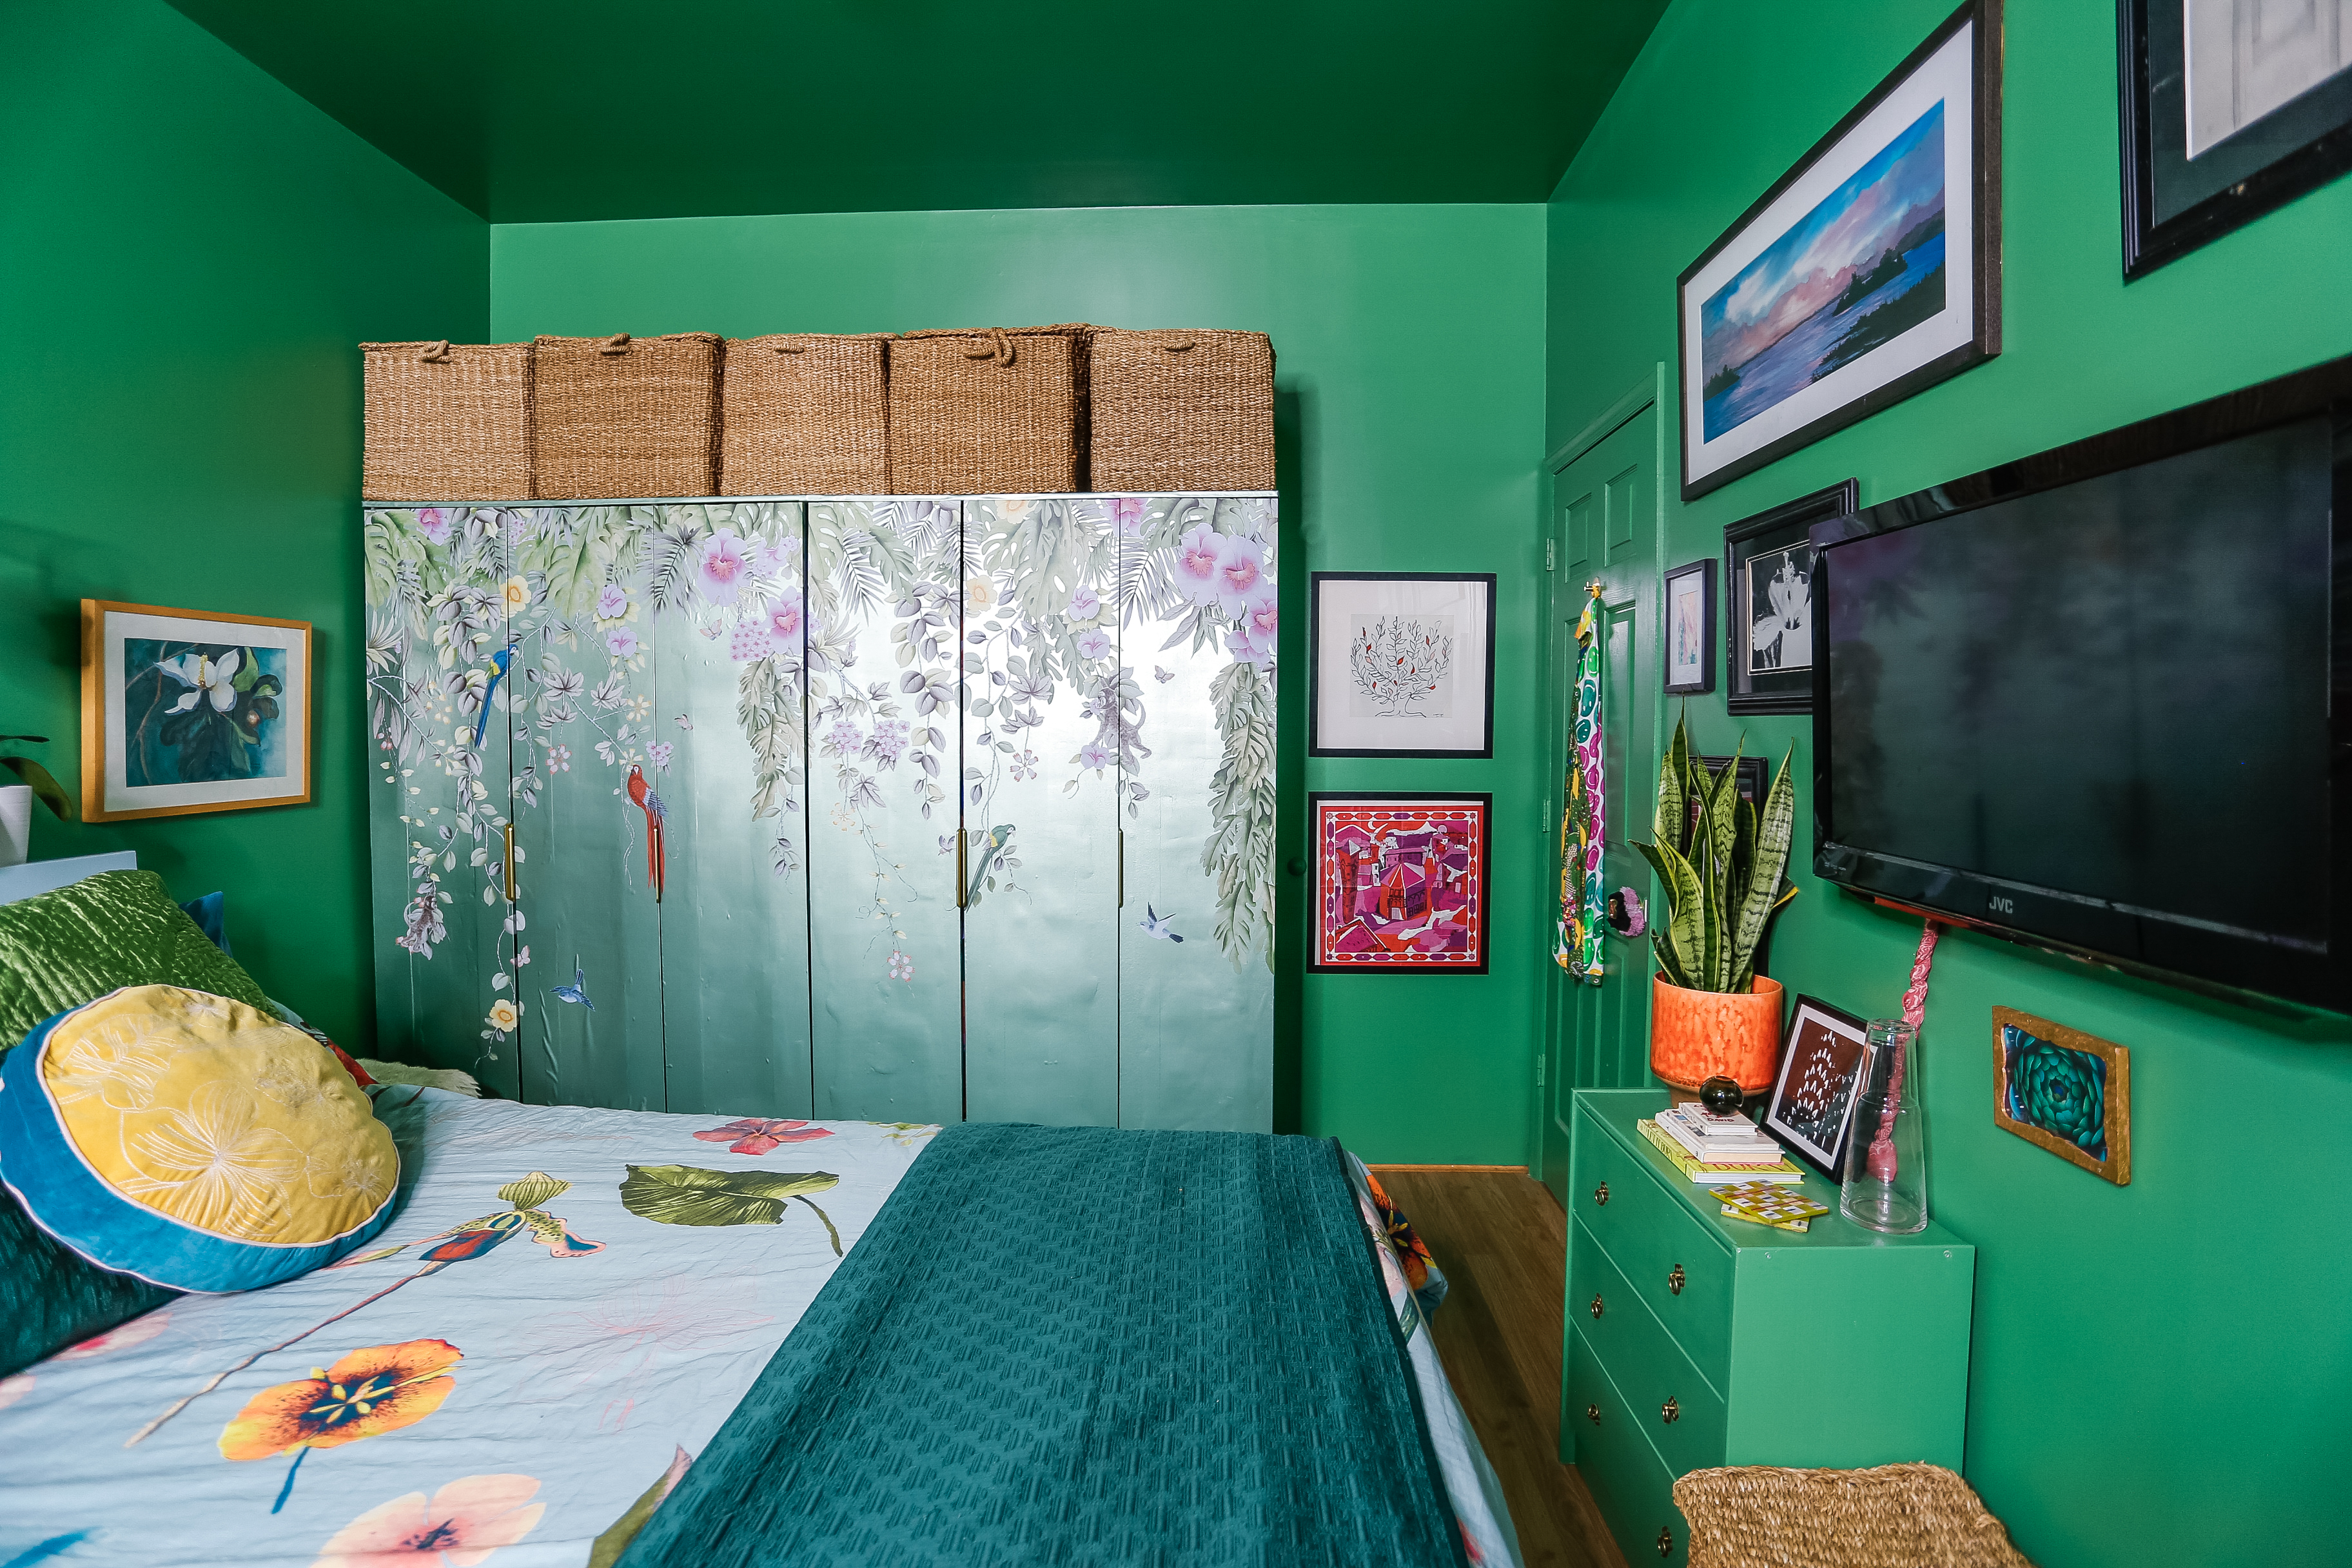 Chinoiserie wallpaper Ideas // Kelly green bedroom // colorful bedroom decor // bright bedroom decor ideas // matcha green bedroom // spring bedroom ideas // whimsy goth bedroom // moody bedrooms // girly bedroom // floral bedroom decor // colorful interiors // diy home decor // tempaper chinoiserie wallpaper // green bedroom ideas // Ikea brimnes wardrobe hacks //